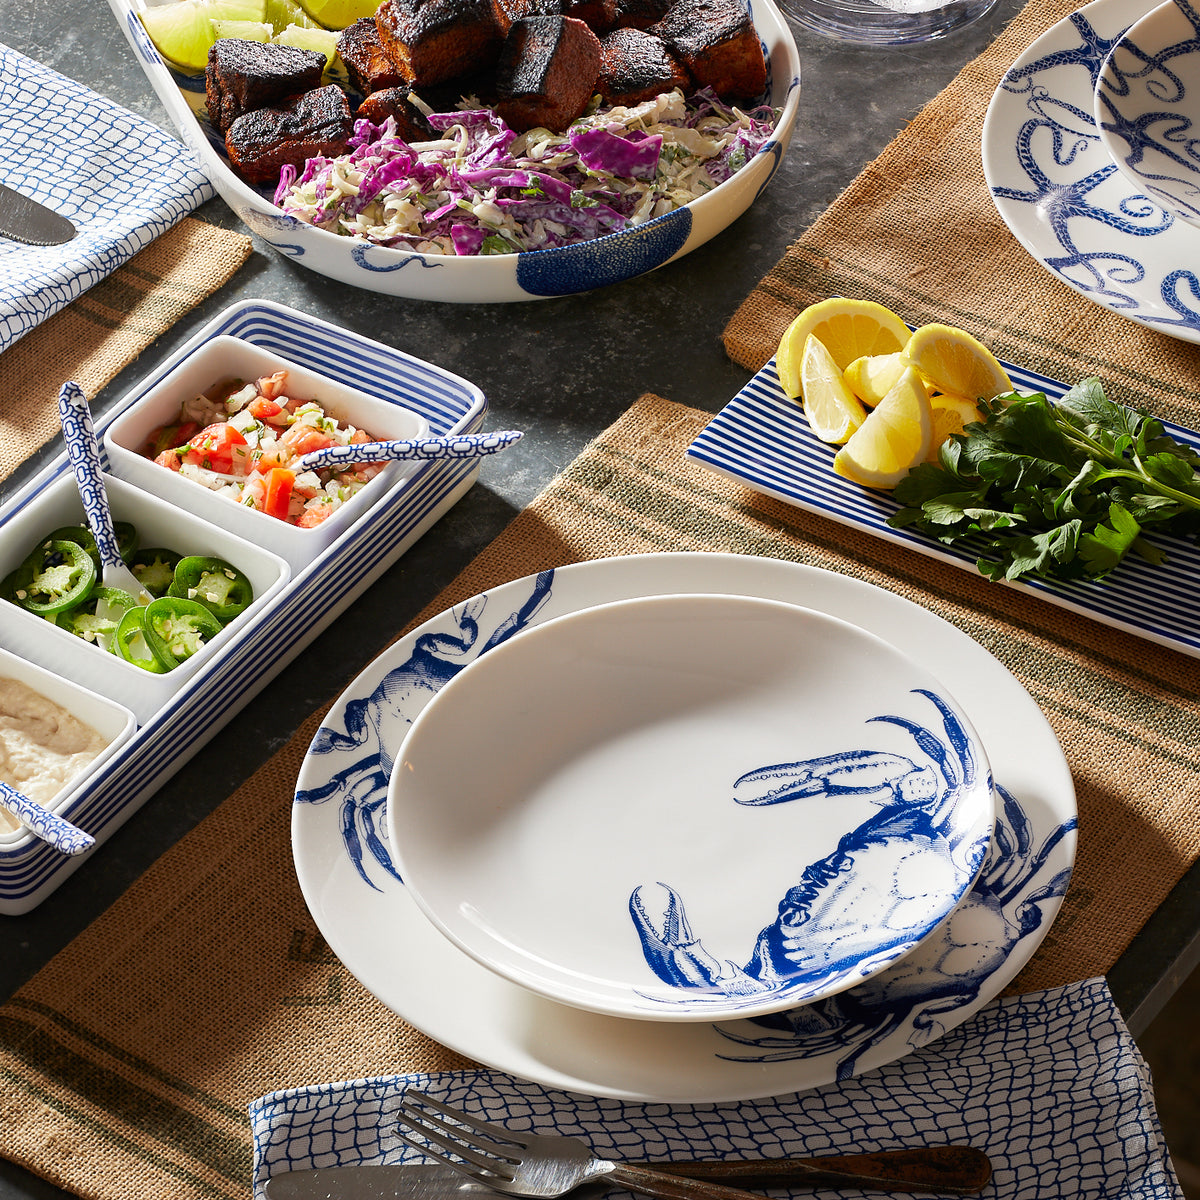 Product description: A Crab Coupe Salad Plate Blue adorned with a Caskata Artisanal Home crab